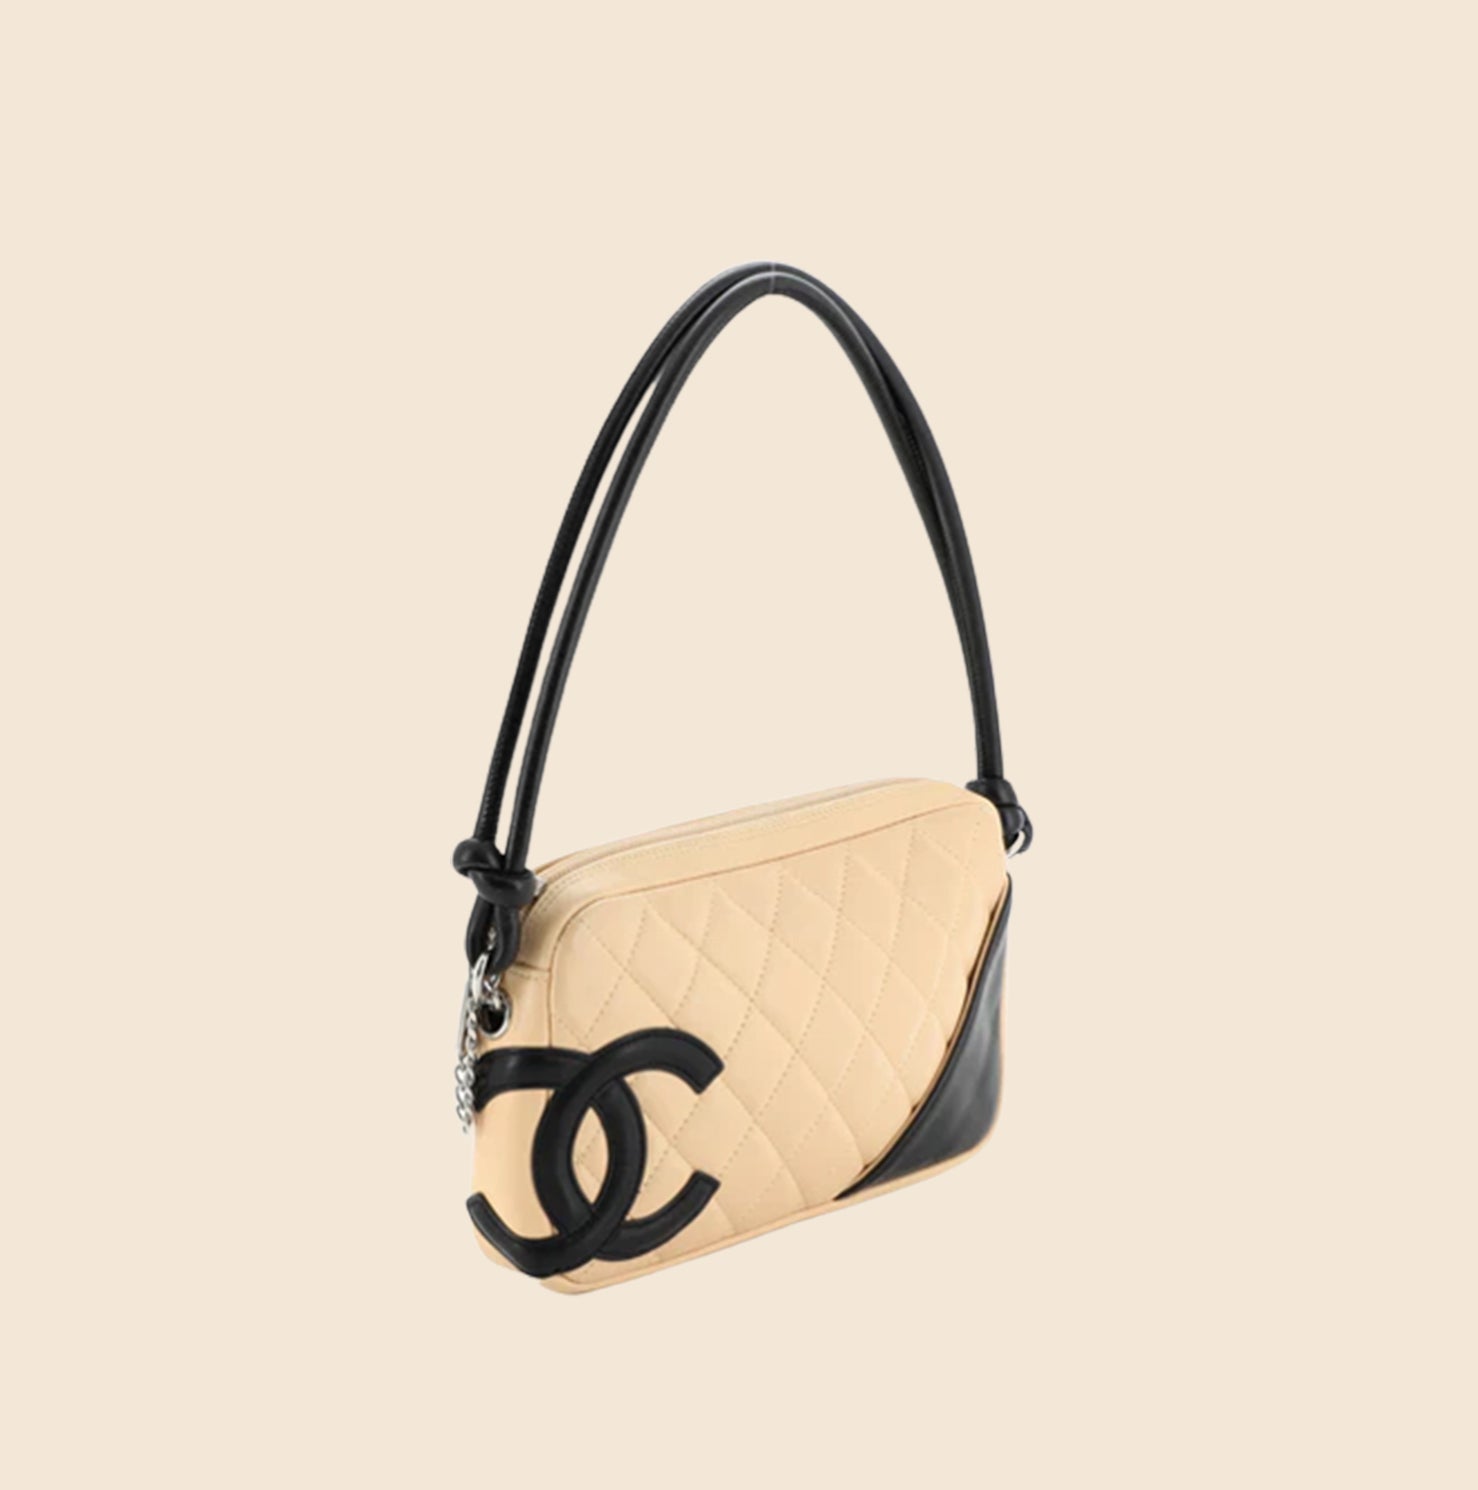 Chanel 31 Rue Cambon Paris bag